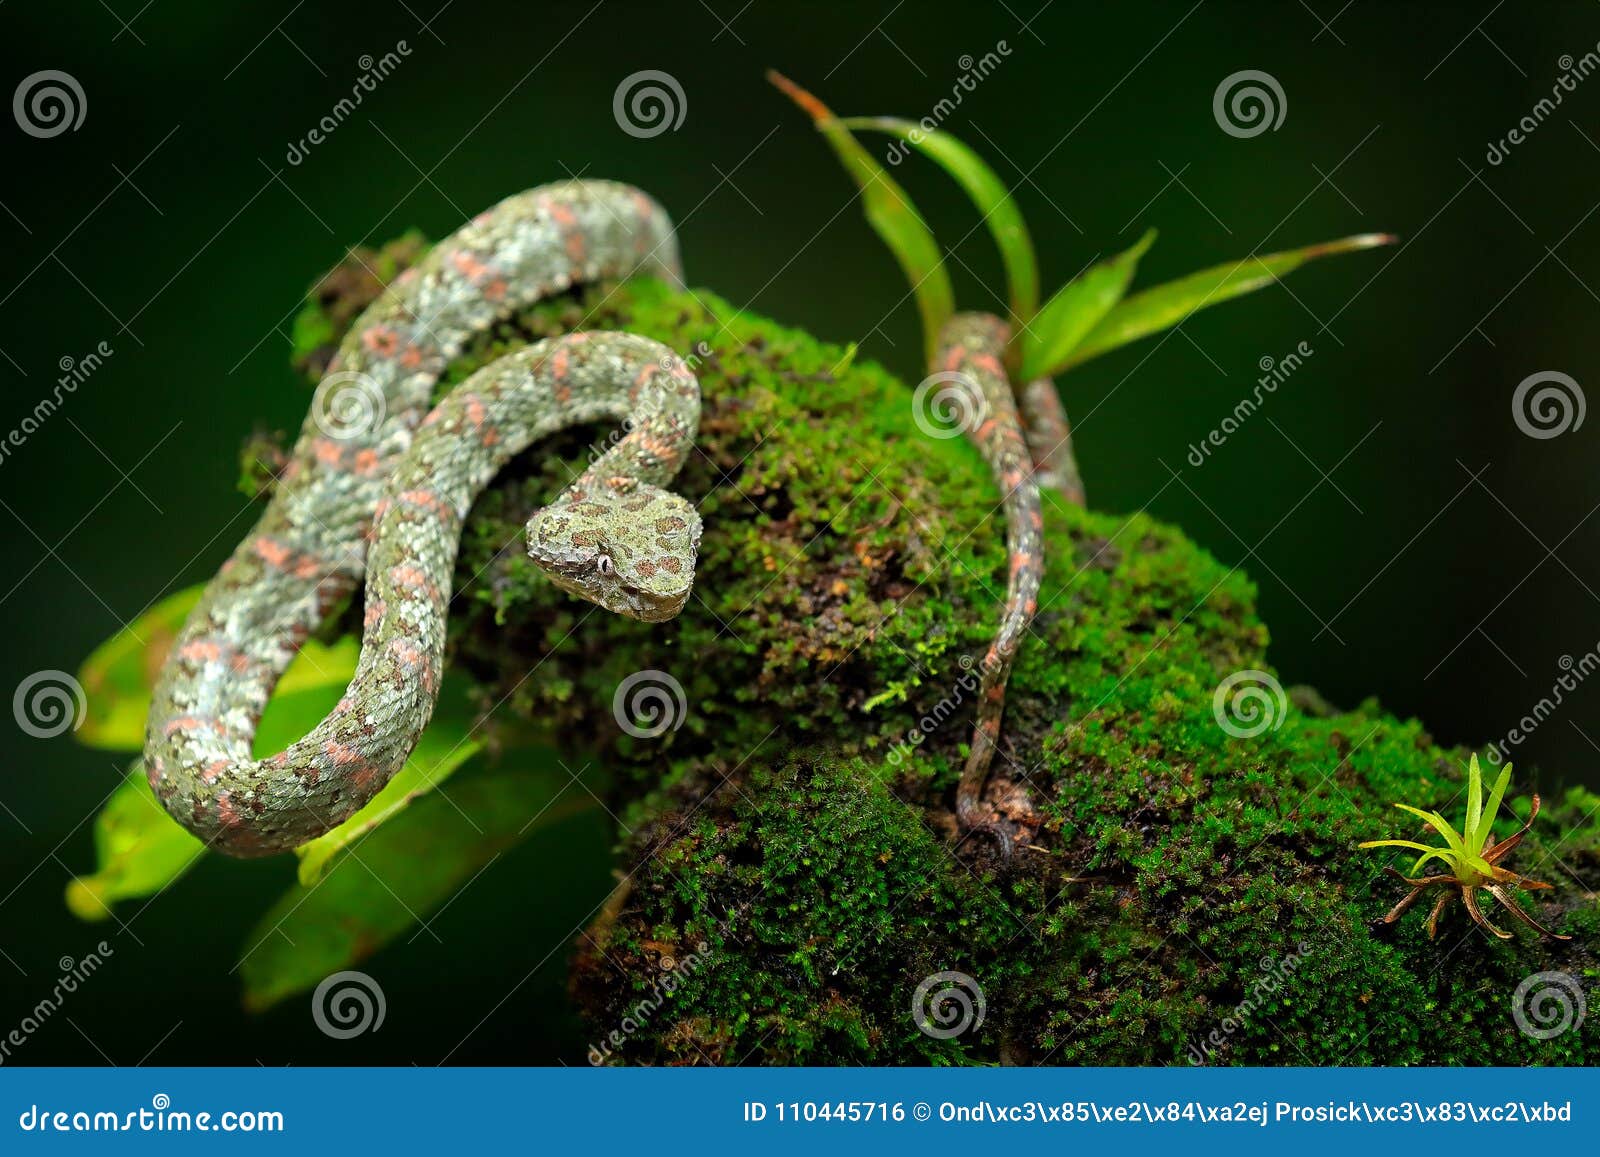 eyelash palm pitviper, bothriechis schlegeli, on the green moss branch. venomous snake in the nature habitat. poisonous animal fro